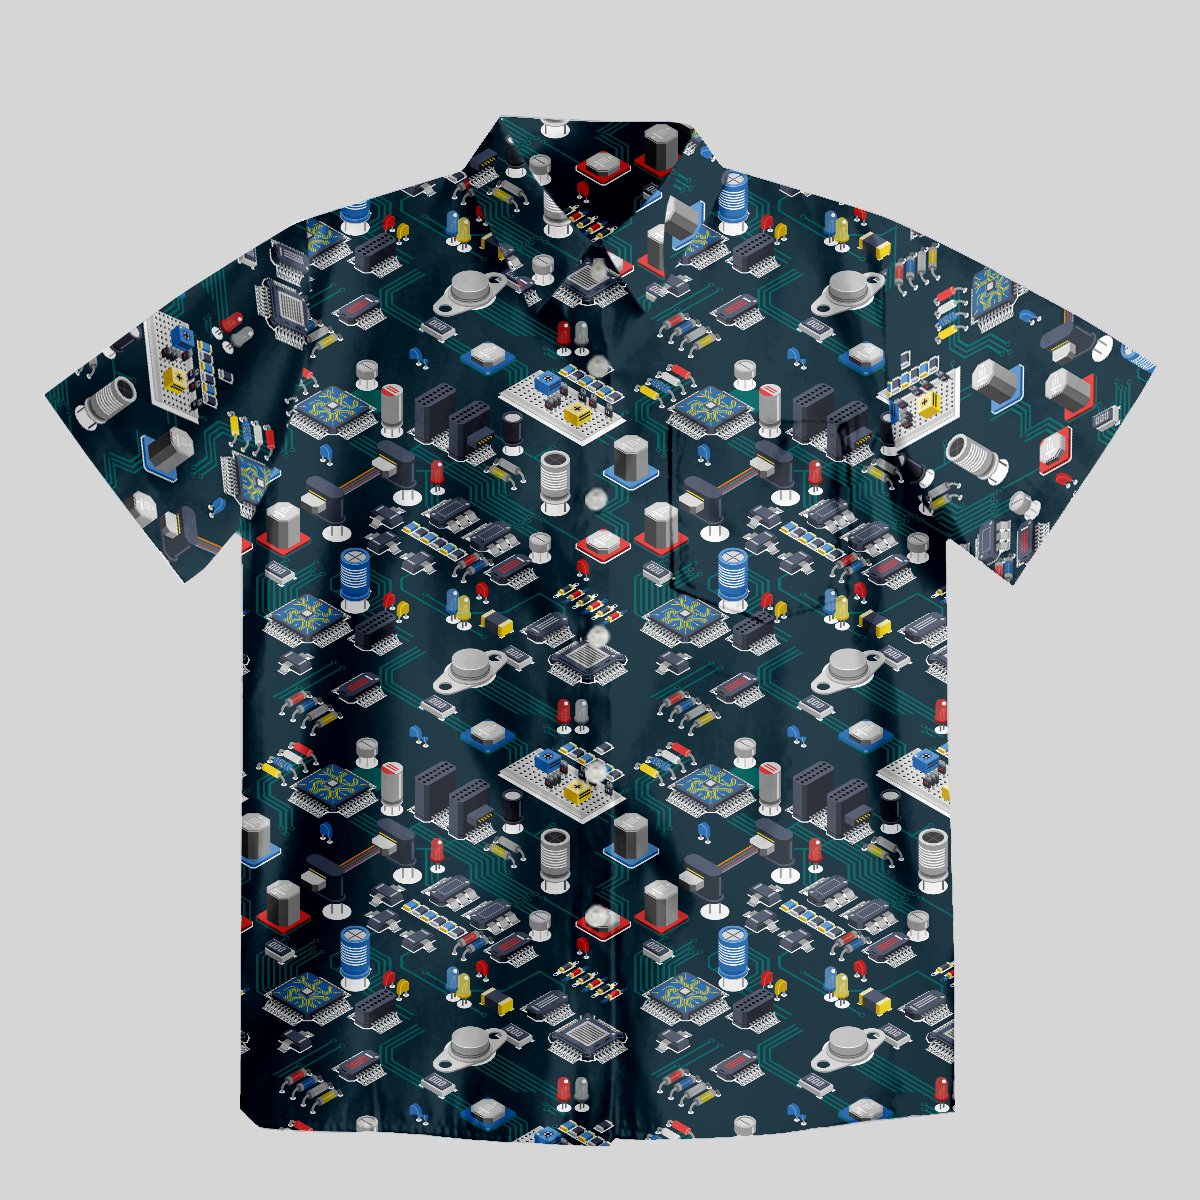 Host Computer City Circuit Board Navy Button Up Pocket Shirt - Geeksoutfit